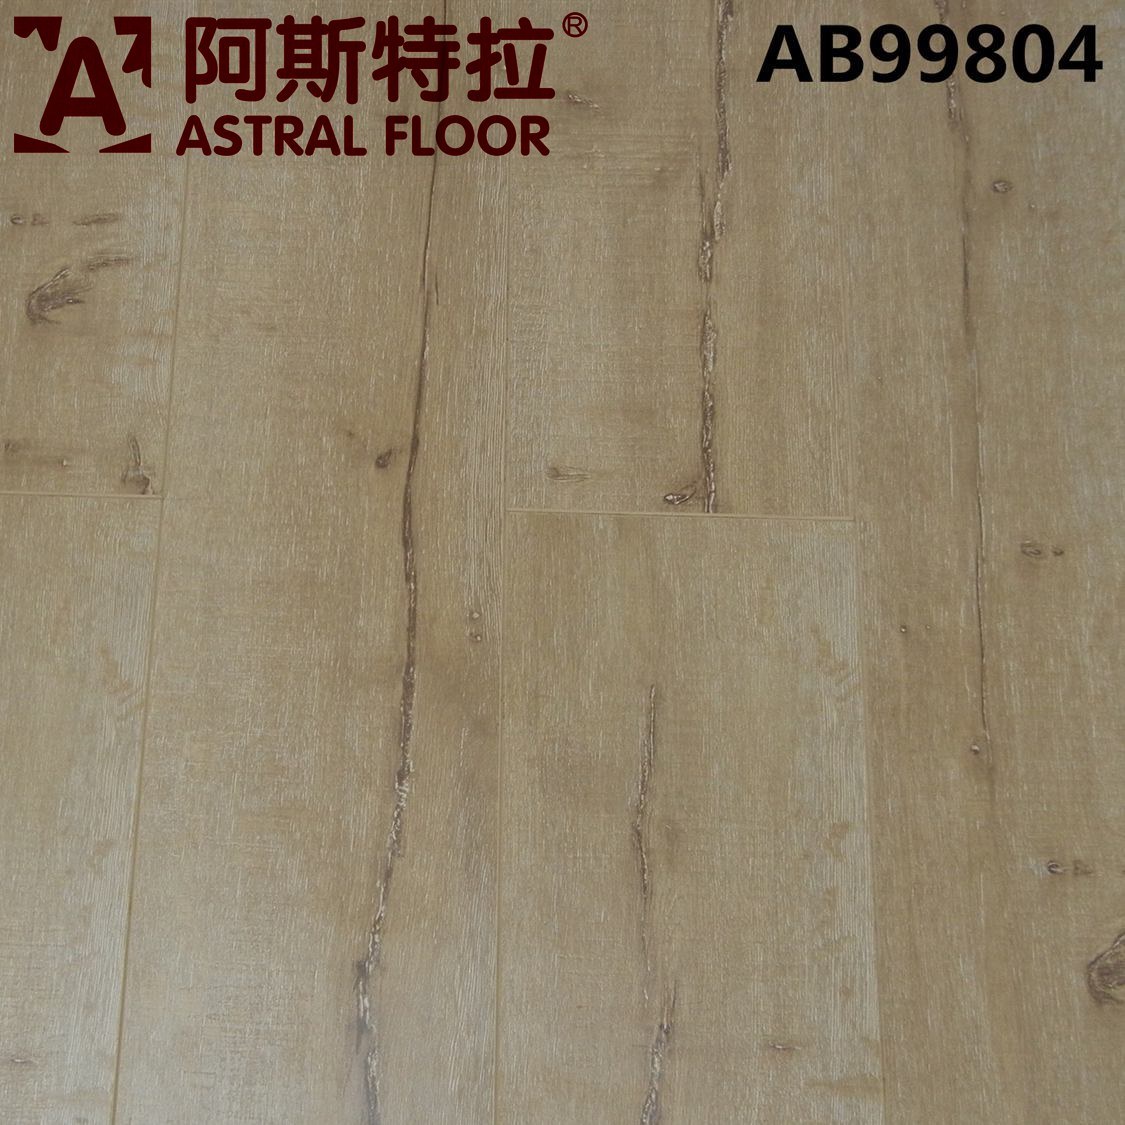 V-Groove 12mm Rotten Wood Grain Surface Laminate Flooring (AB99804)